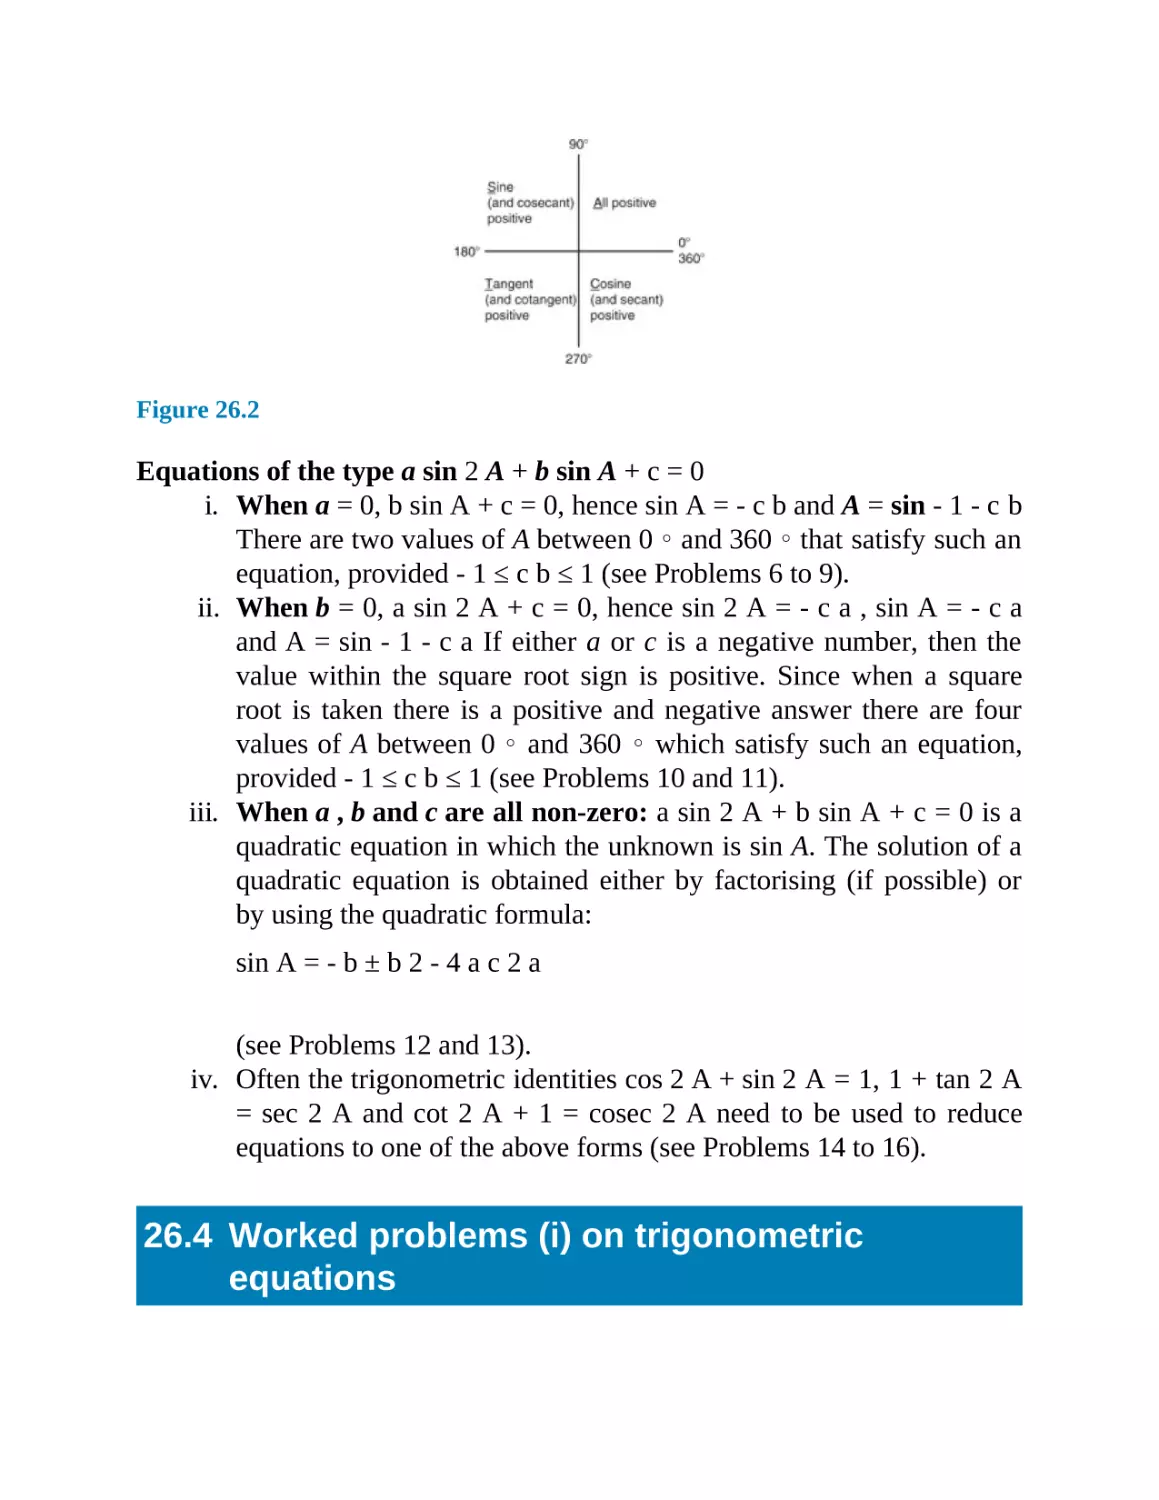 26.4 Worked problems (i) on trigonometric equations